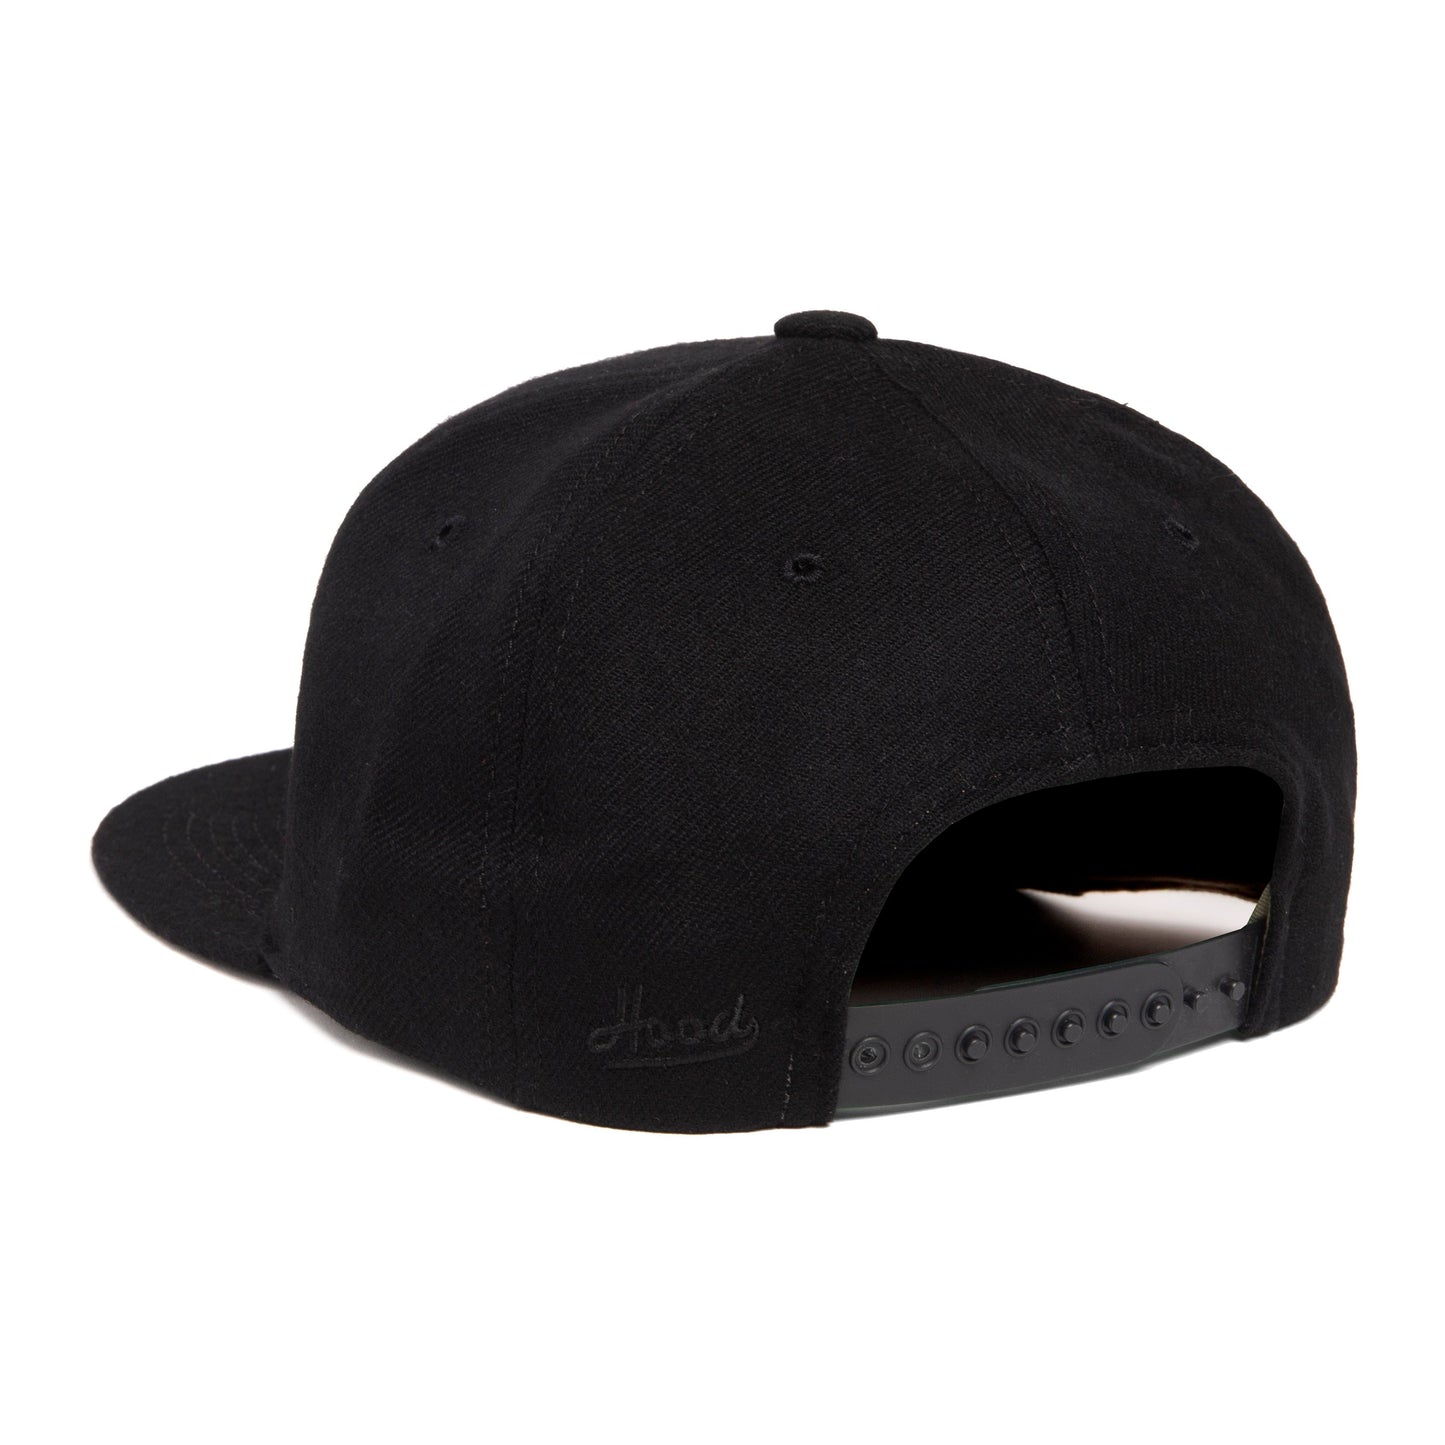 Bel Air Ram Snapback Hat